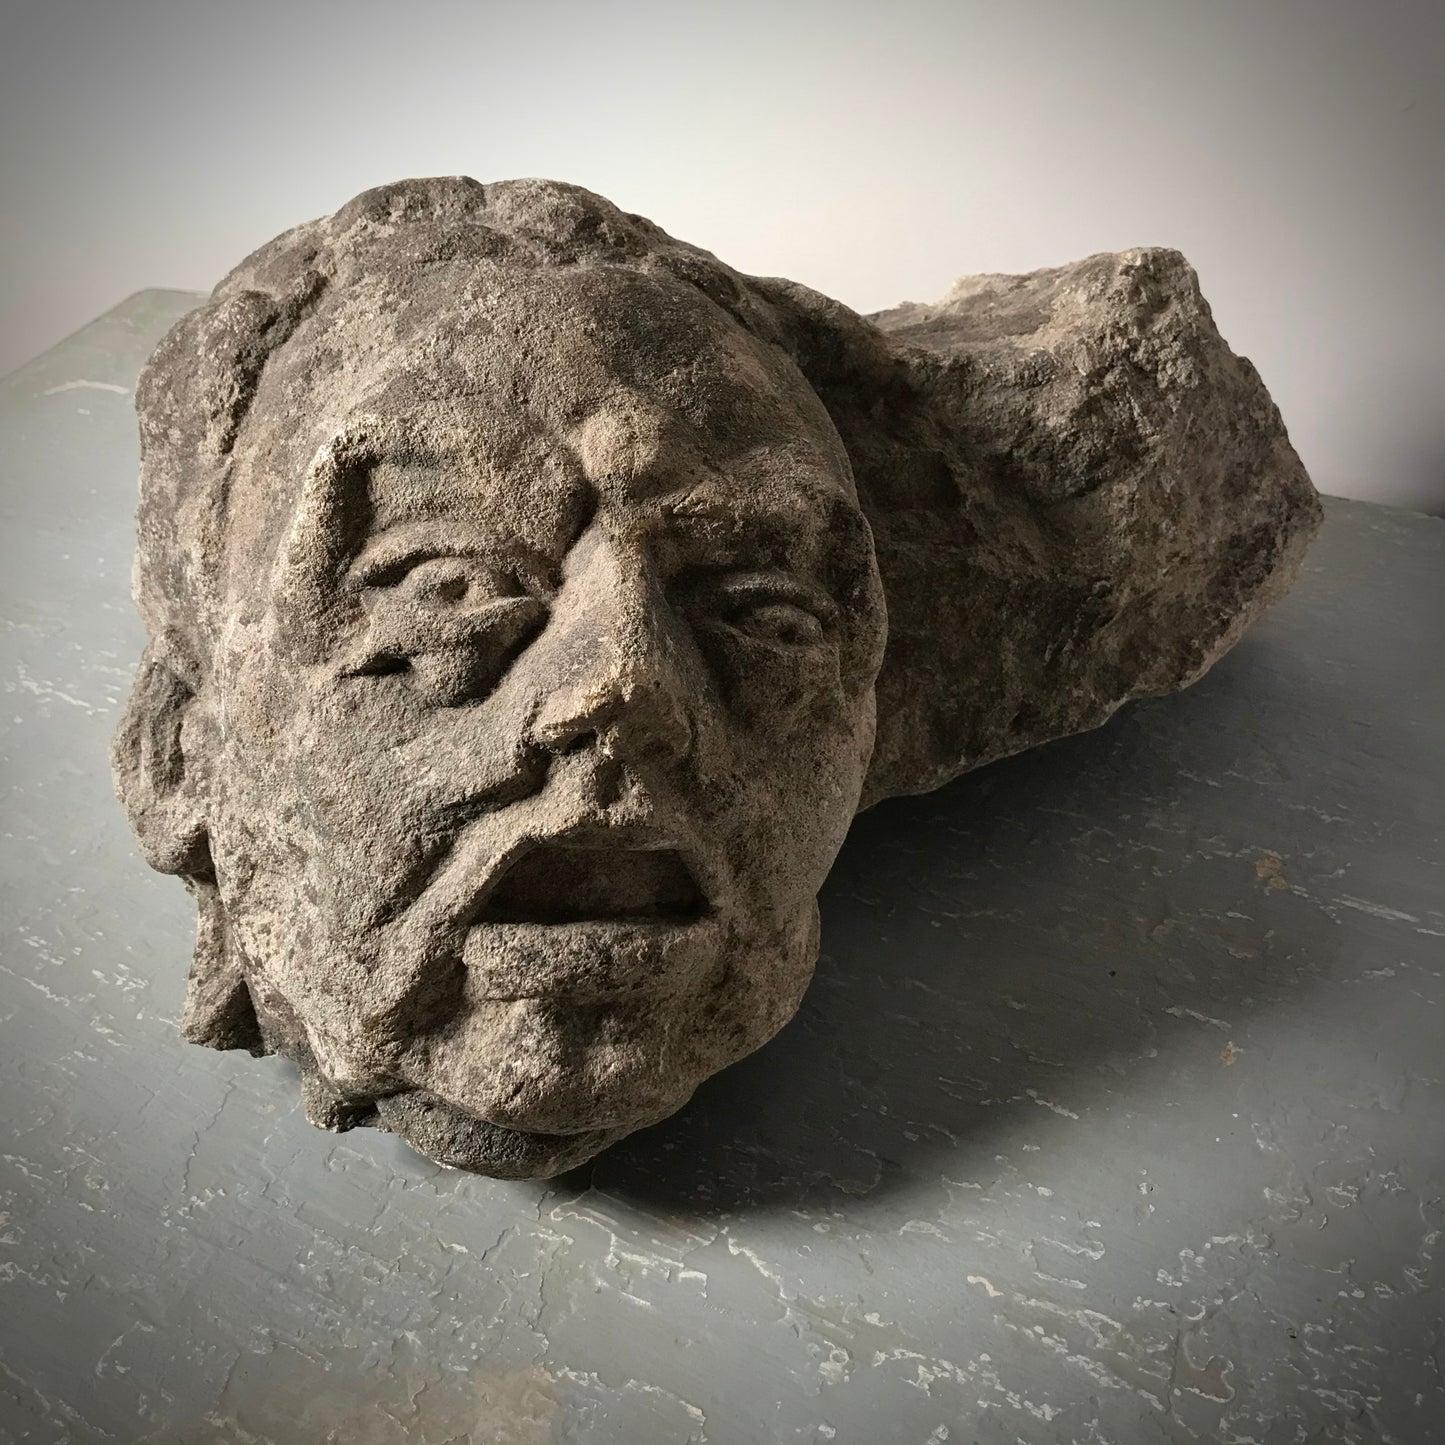 Medieval Stone Martyr or Sinners Head